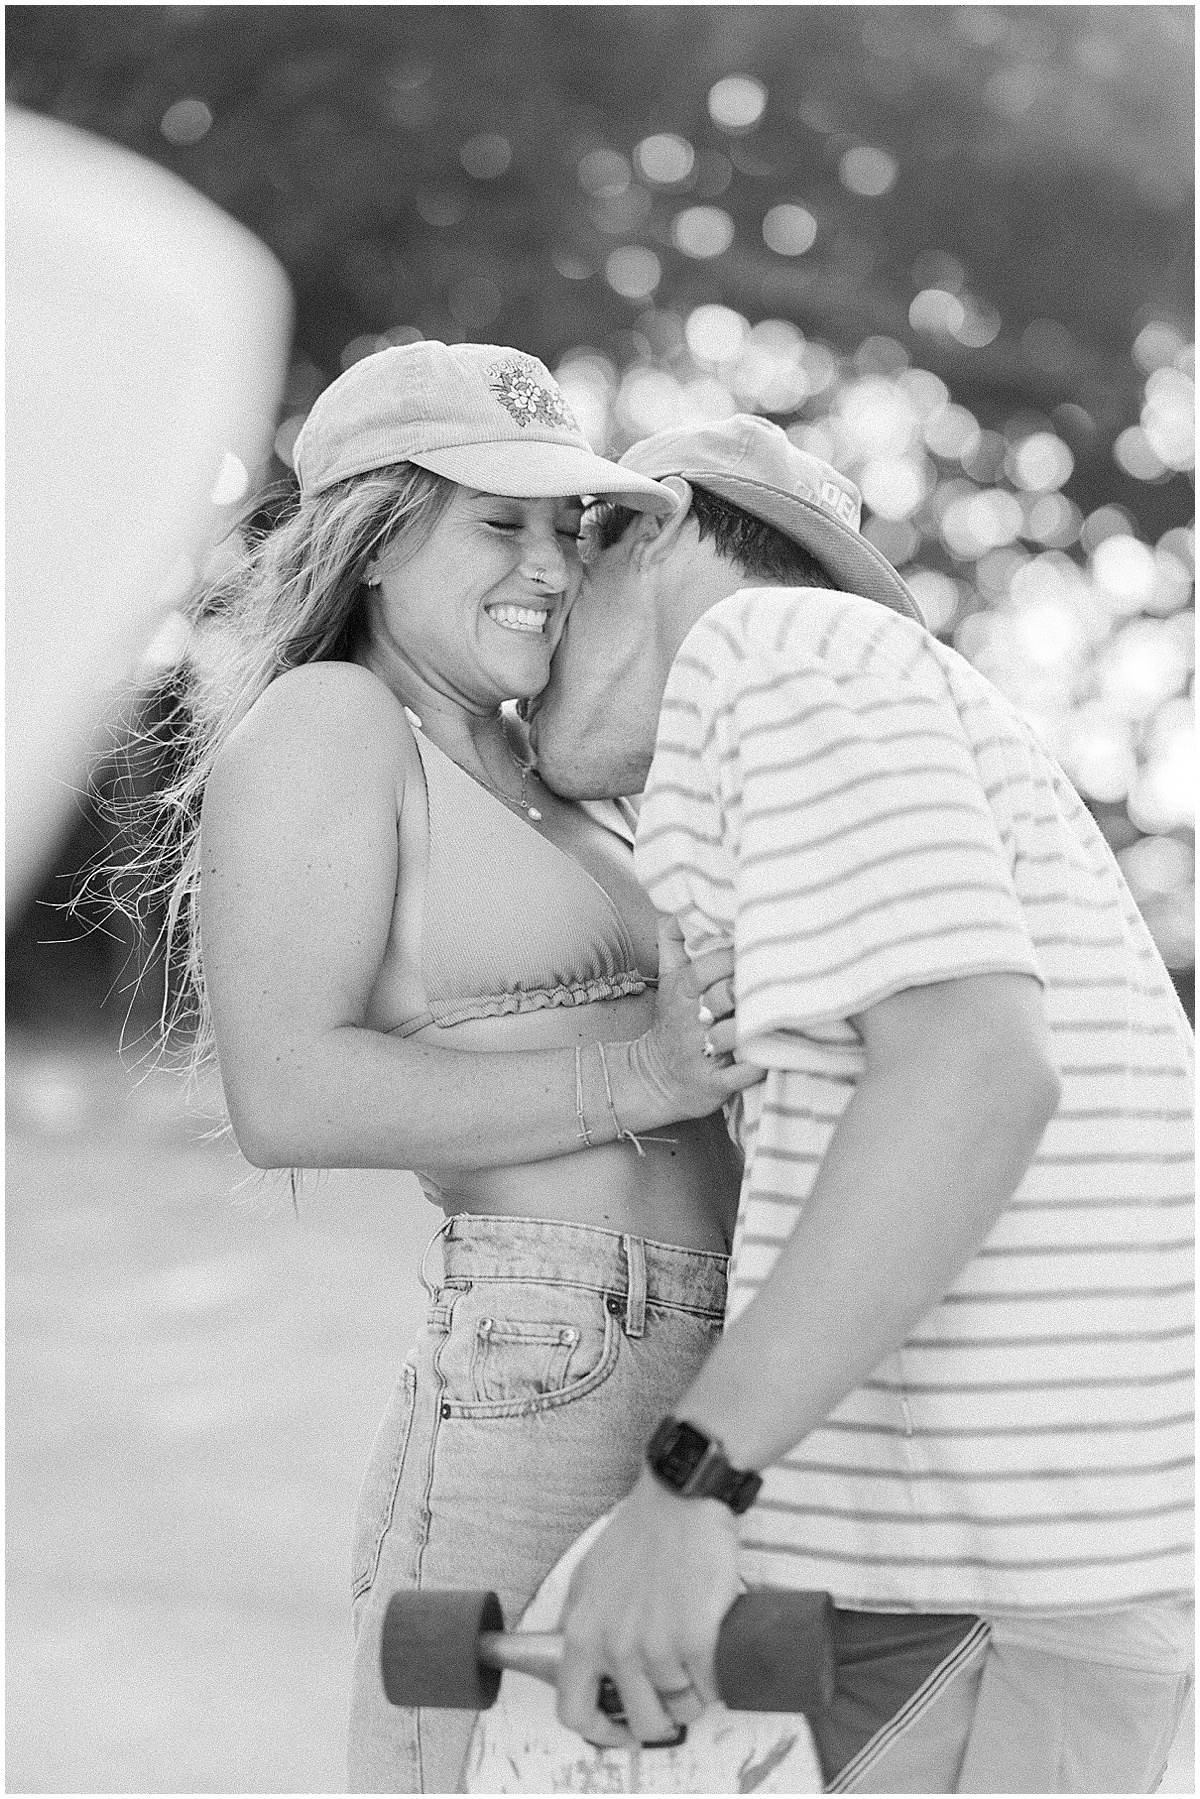 Black and White Wedding Photography | West Palm Beach, FL | Married in Palm Beach | www.marriedinpalmbeach.com | Vanessa Palomino Photography